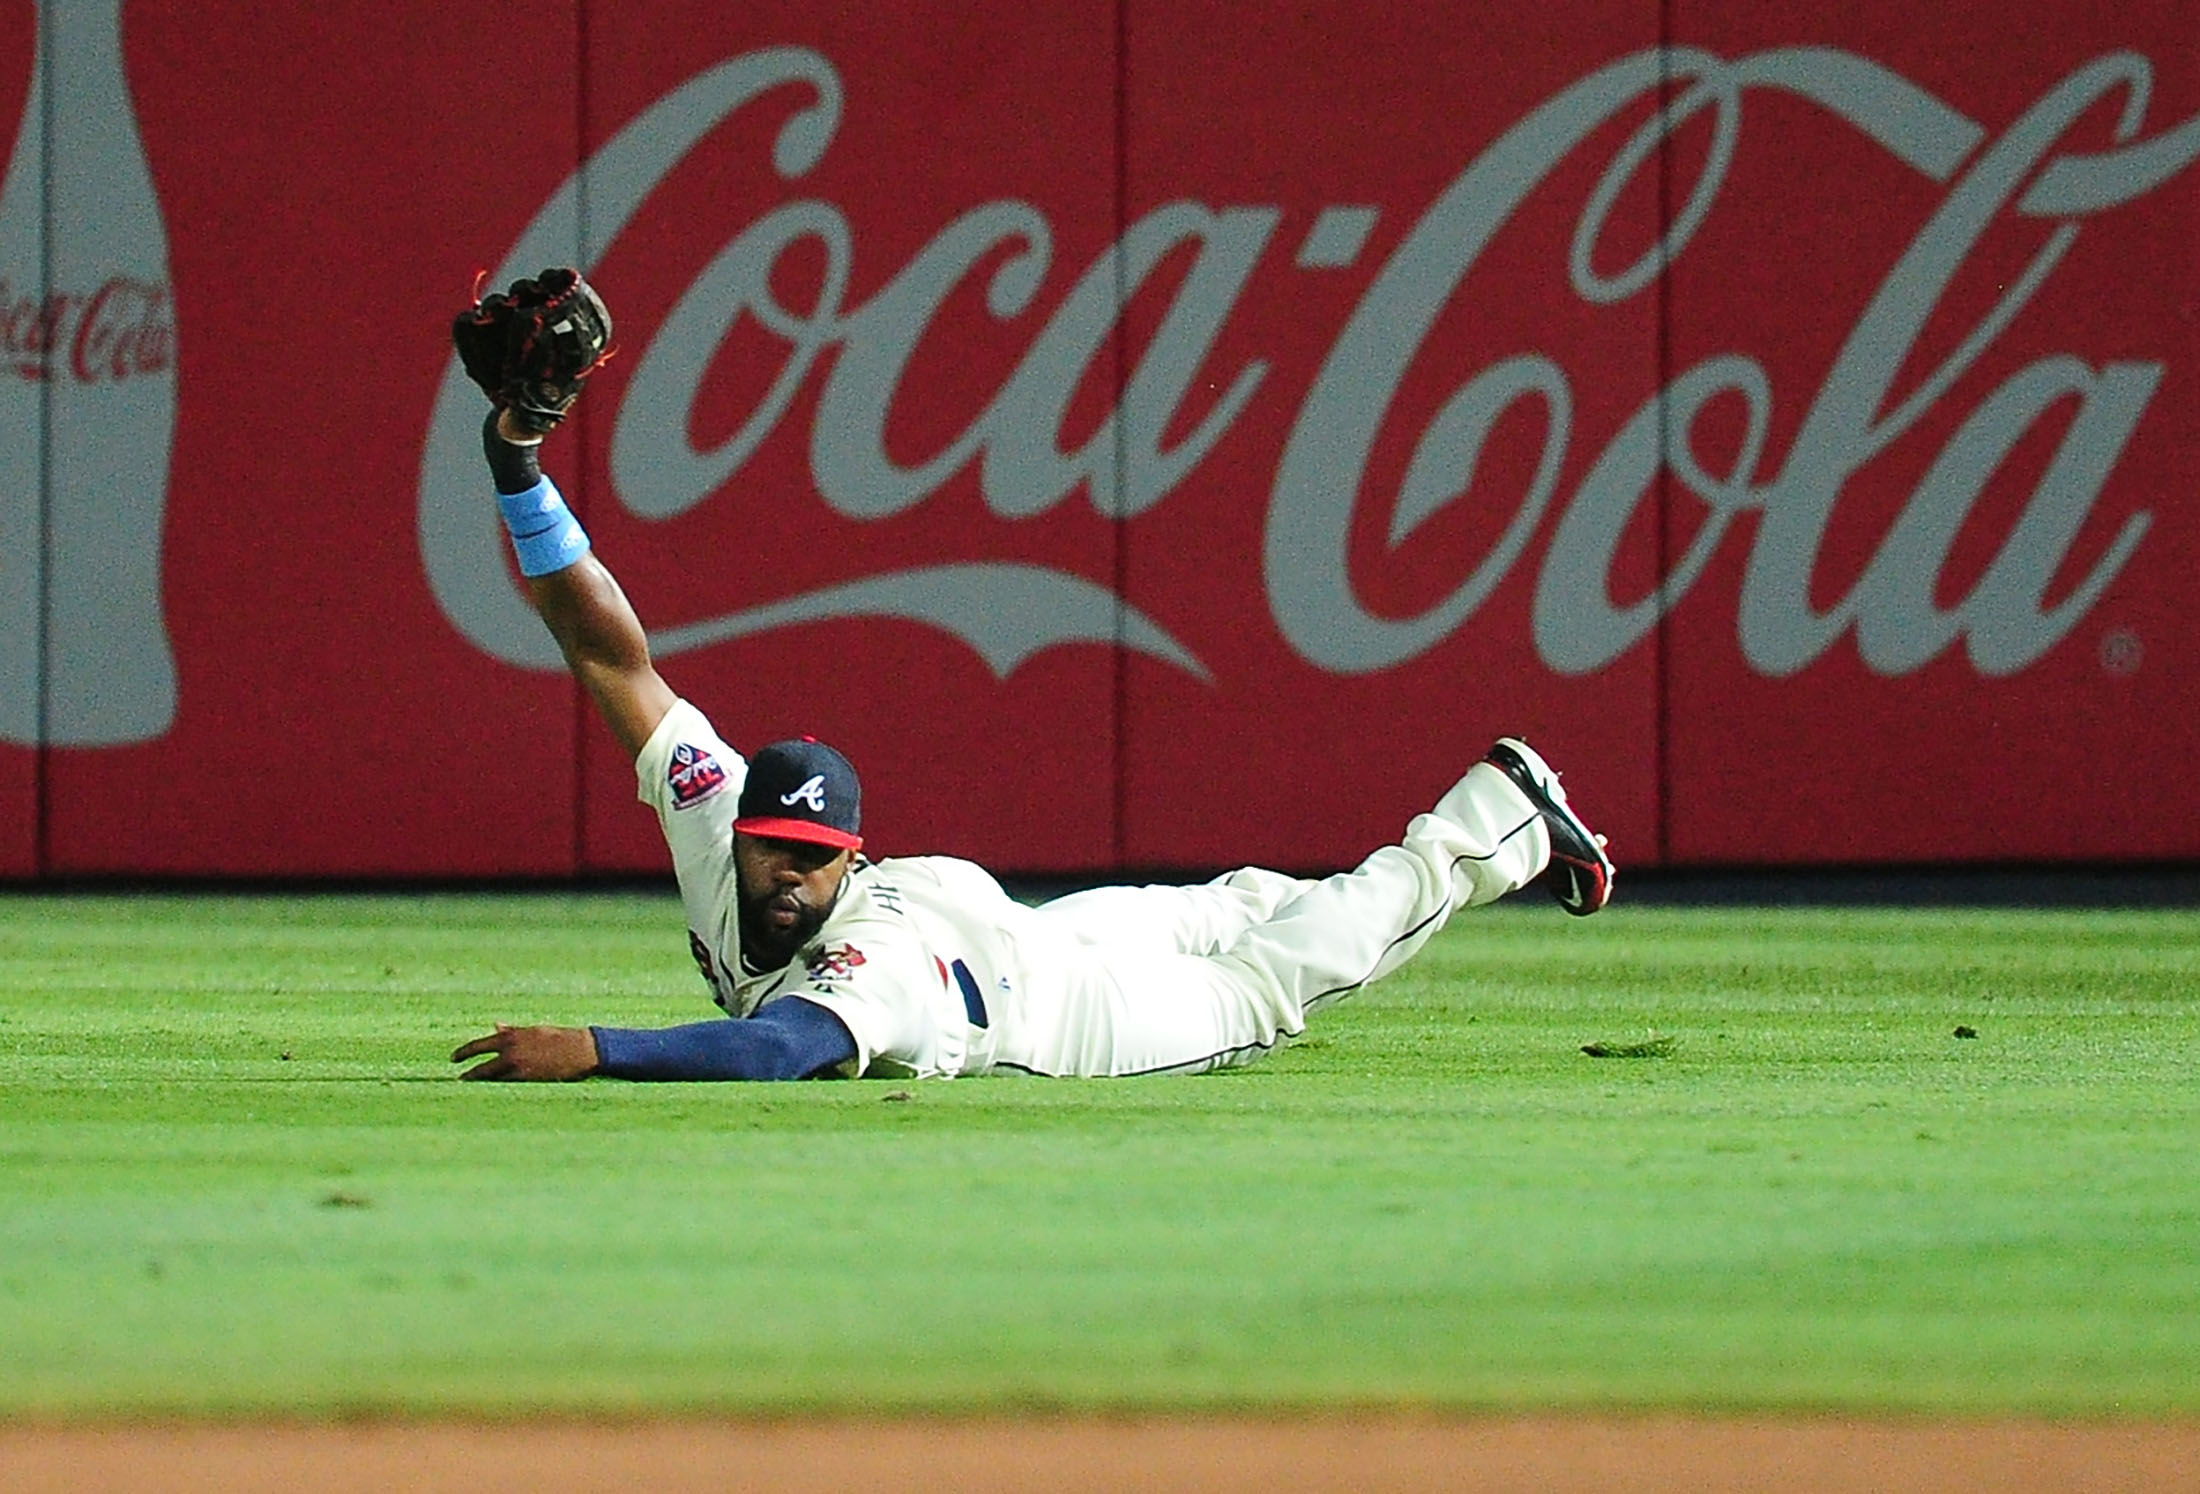 Jason Heyward of the Atlanta Braves makes a diving catch at Turner Field in Atlanta, Georgia, on June 15, 2014.
